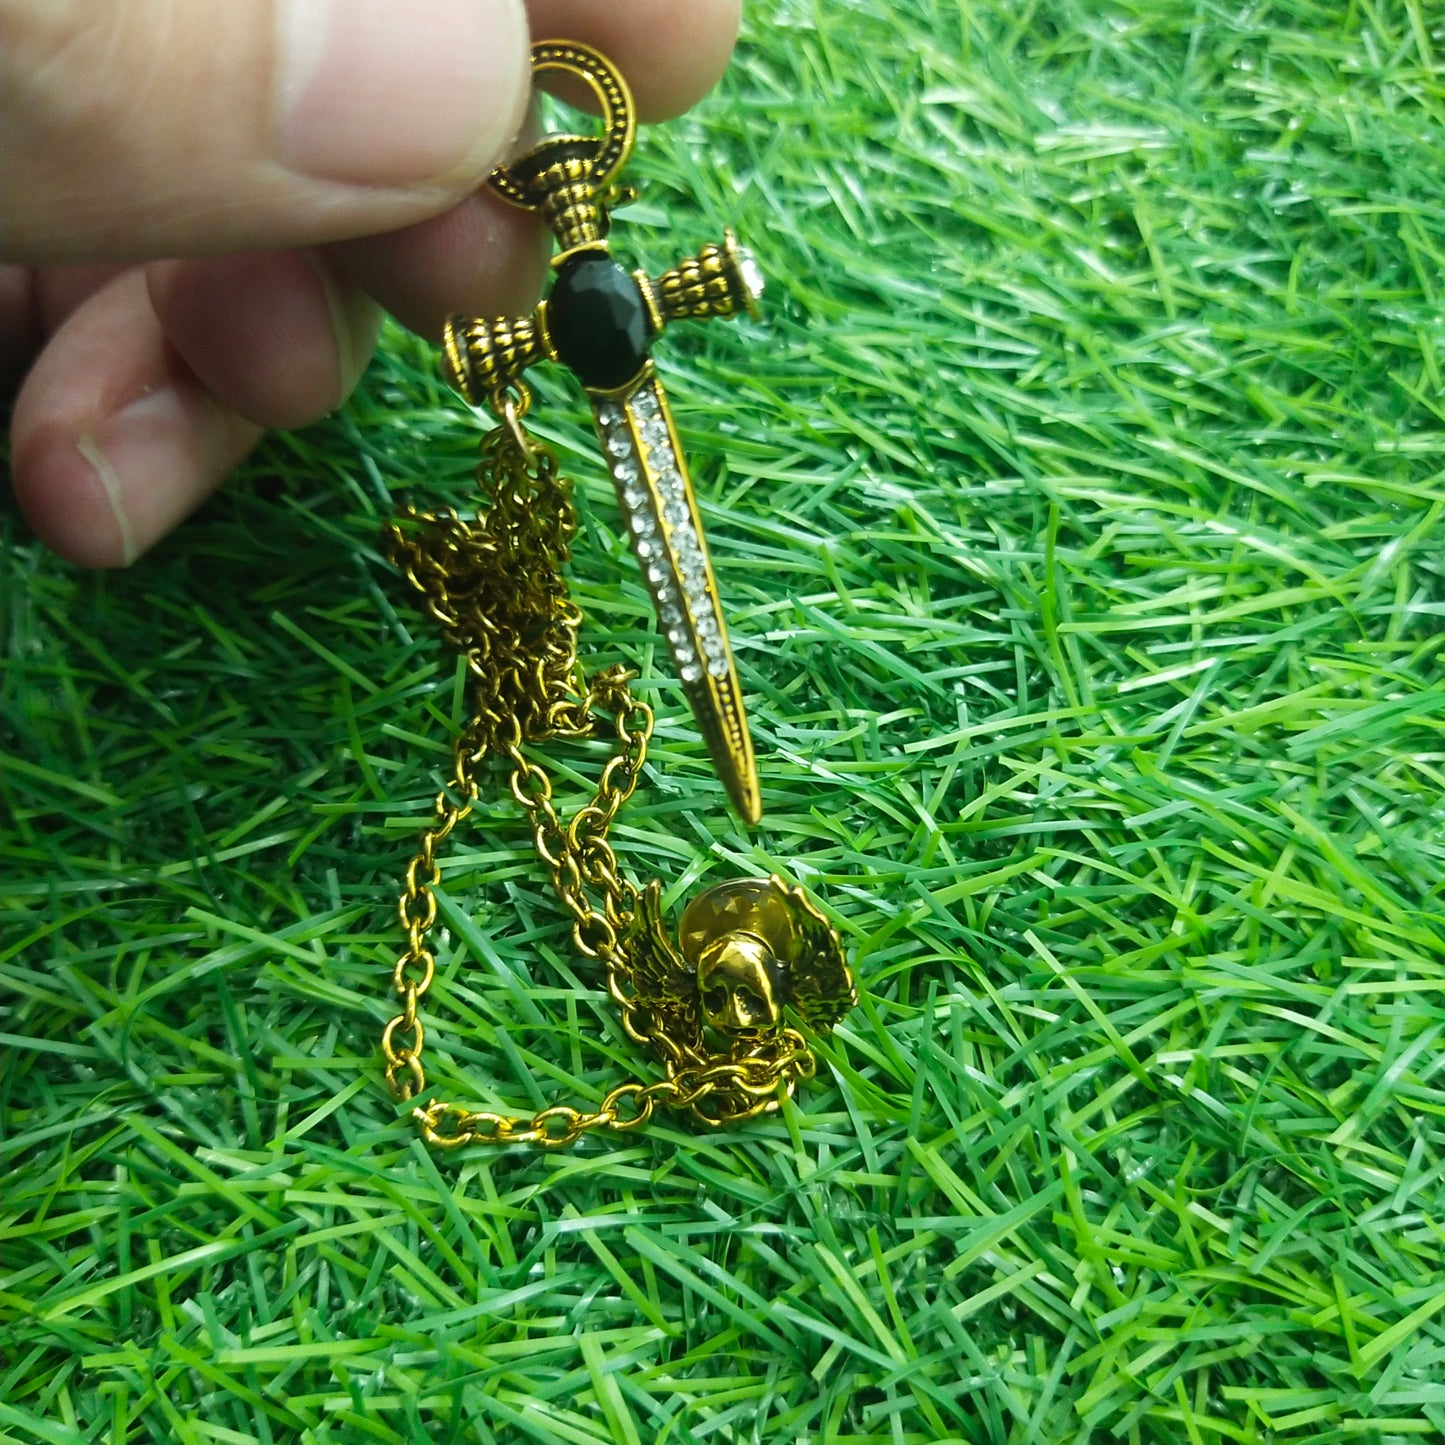 Antique Gold Sword & Skull Chain Brooch For Men